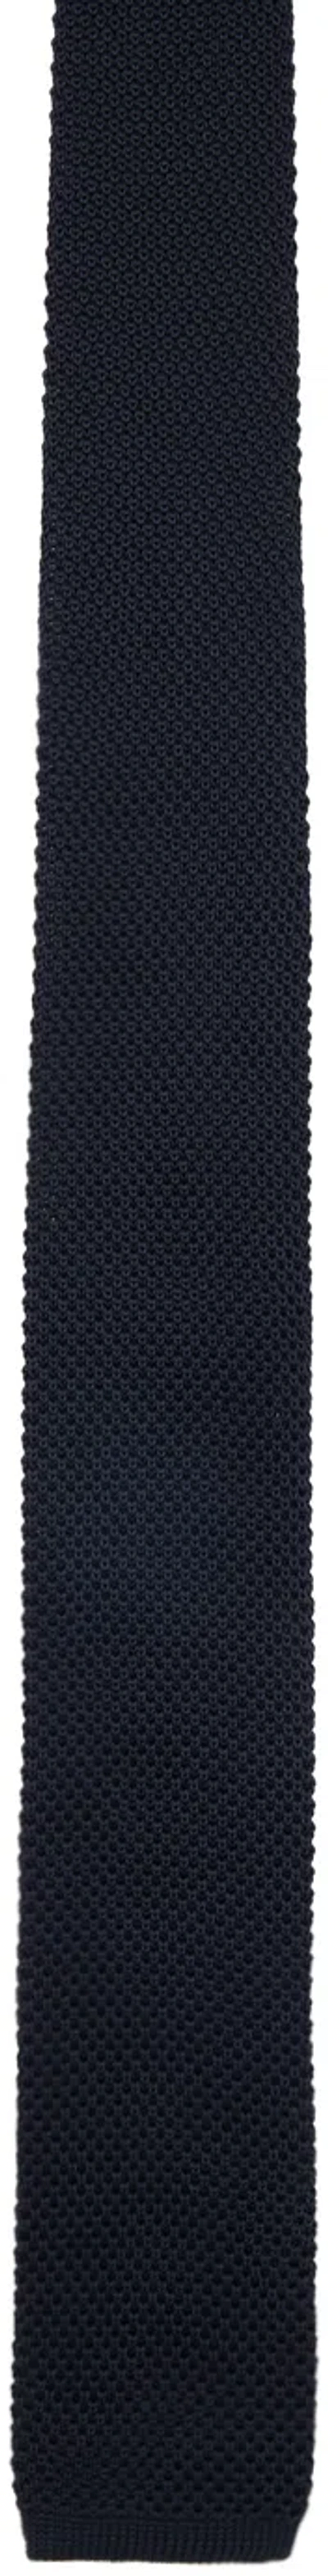 Solid Homme Navy Knit Tie In Black